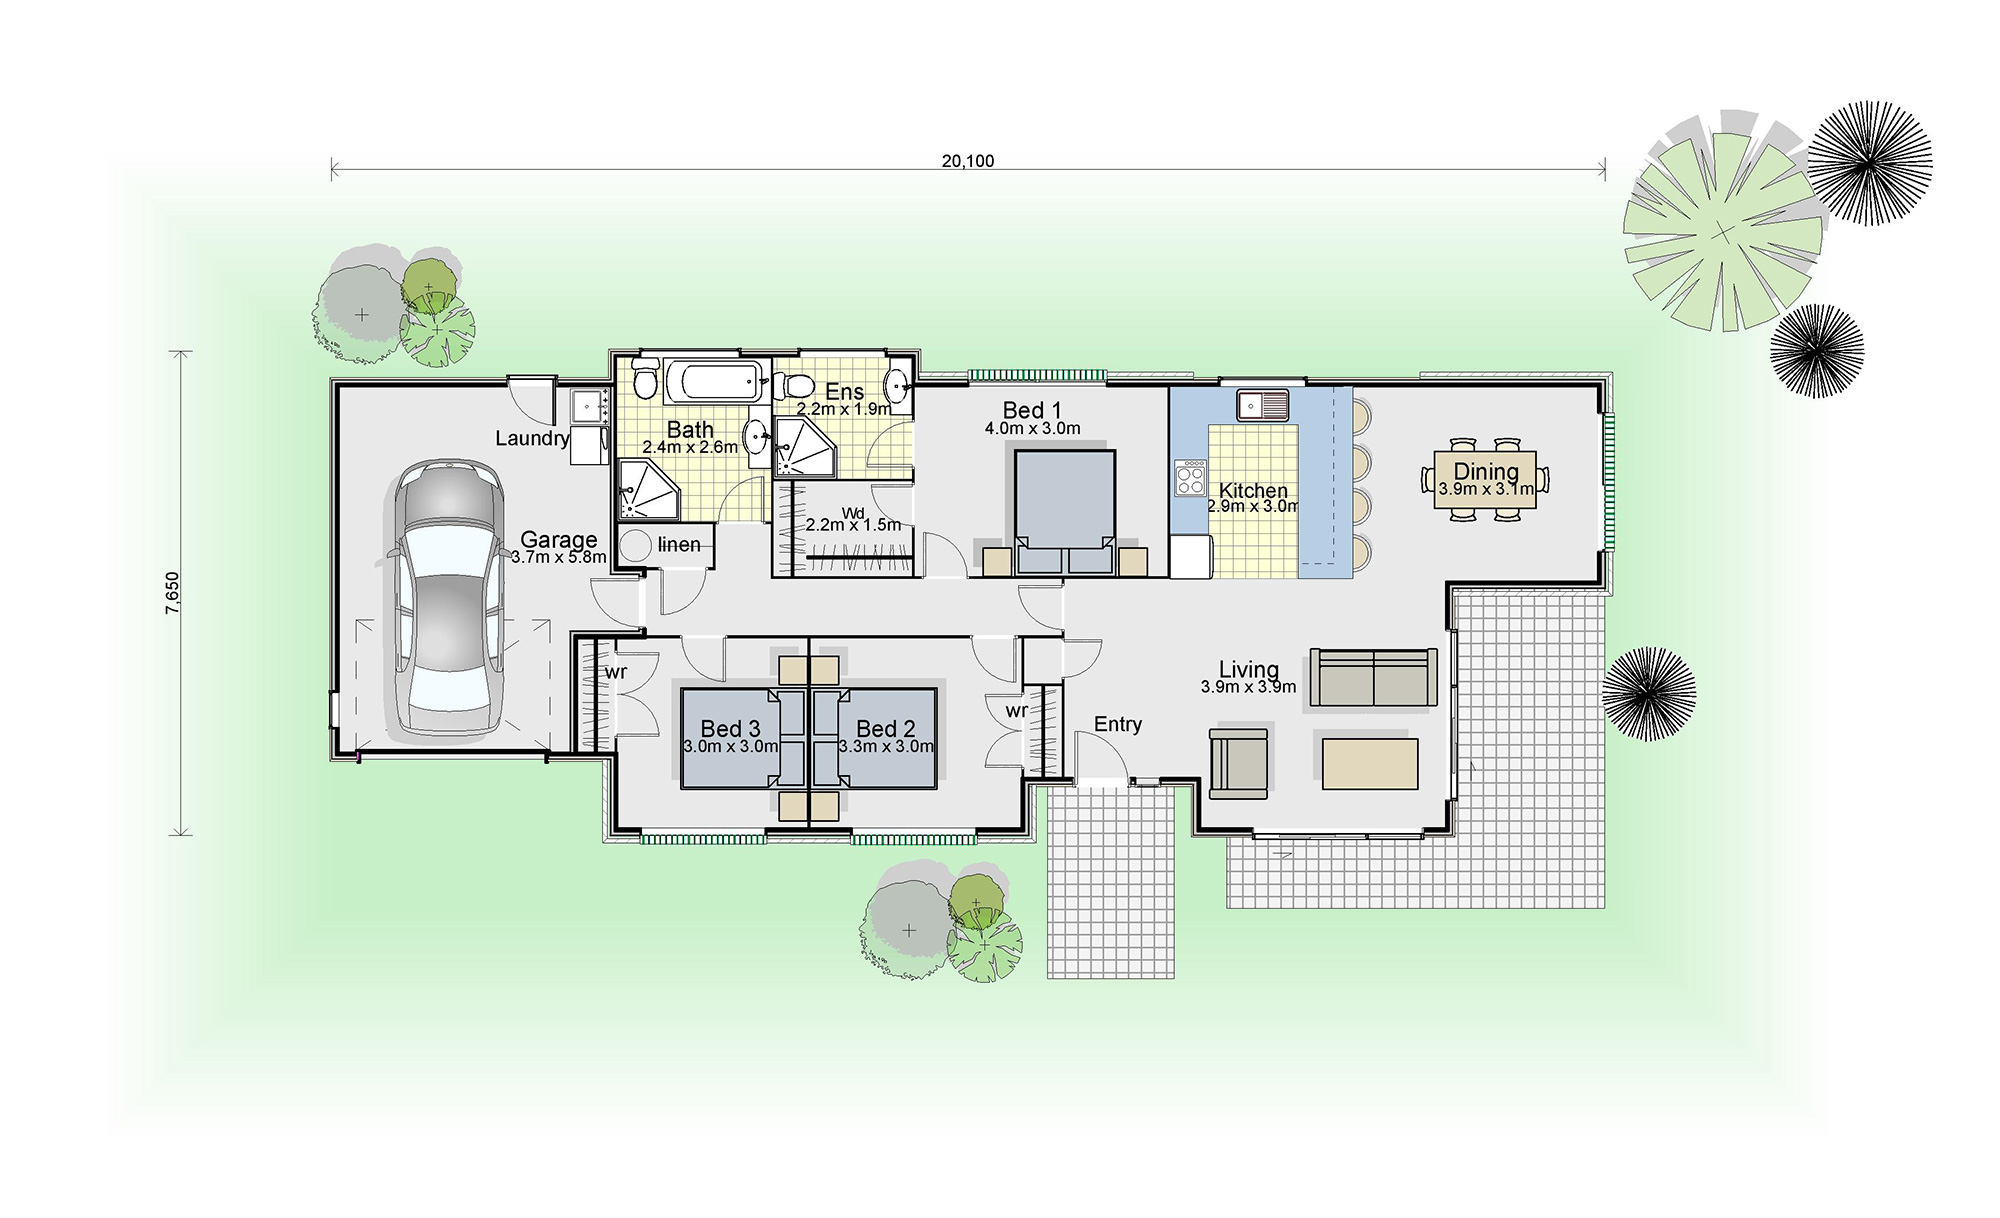 Longview Homes - 3 bedrooms, 2 bathroom - 129m2 house build design plan